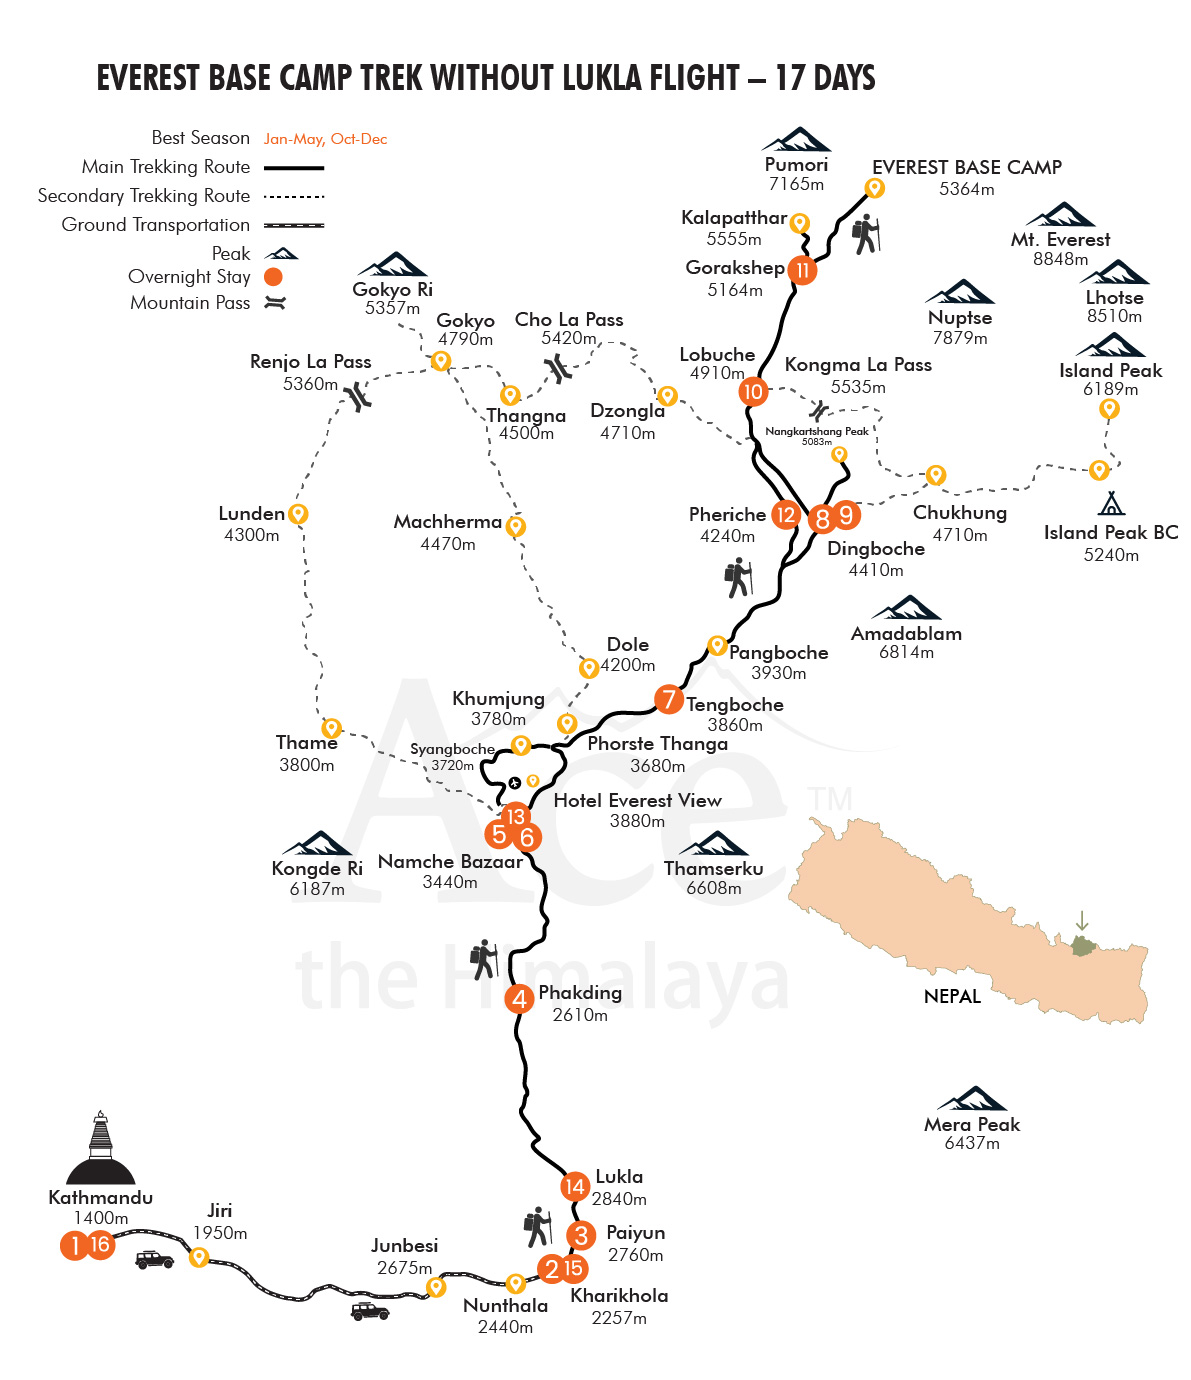 Everest Base Camp Trek without Lukla Flight map